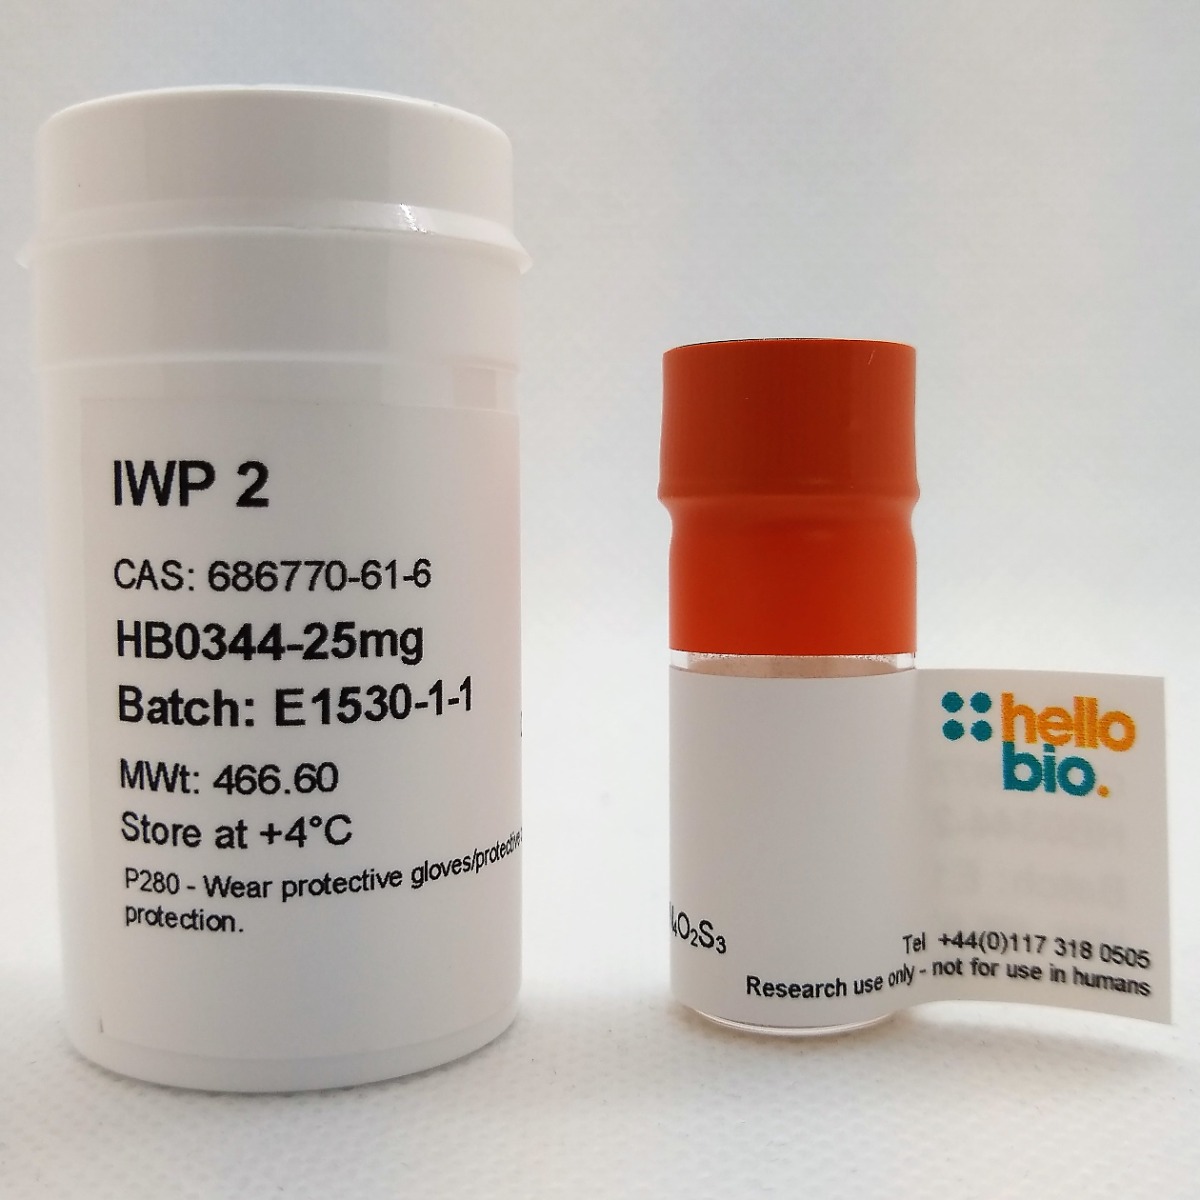 IWP 2 product vial image | Hello Bio